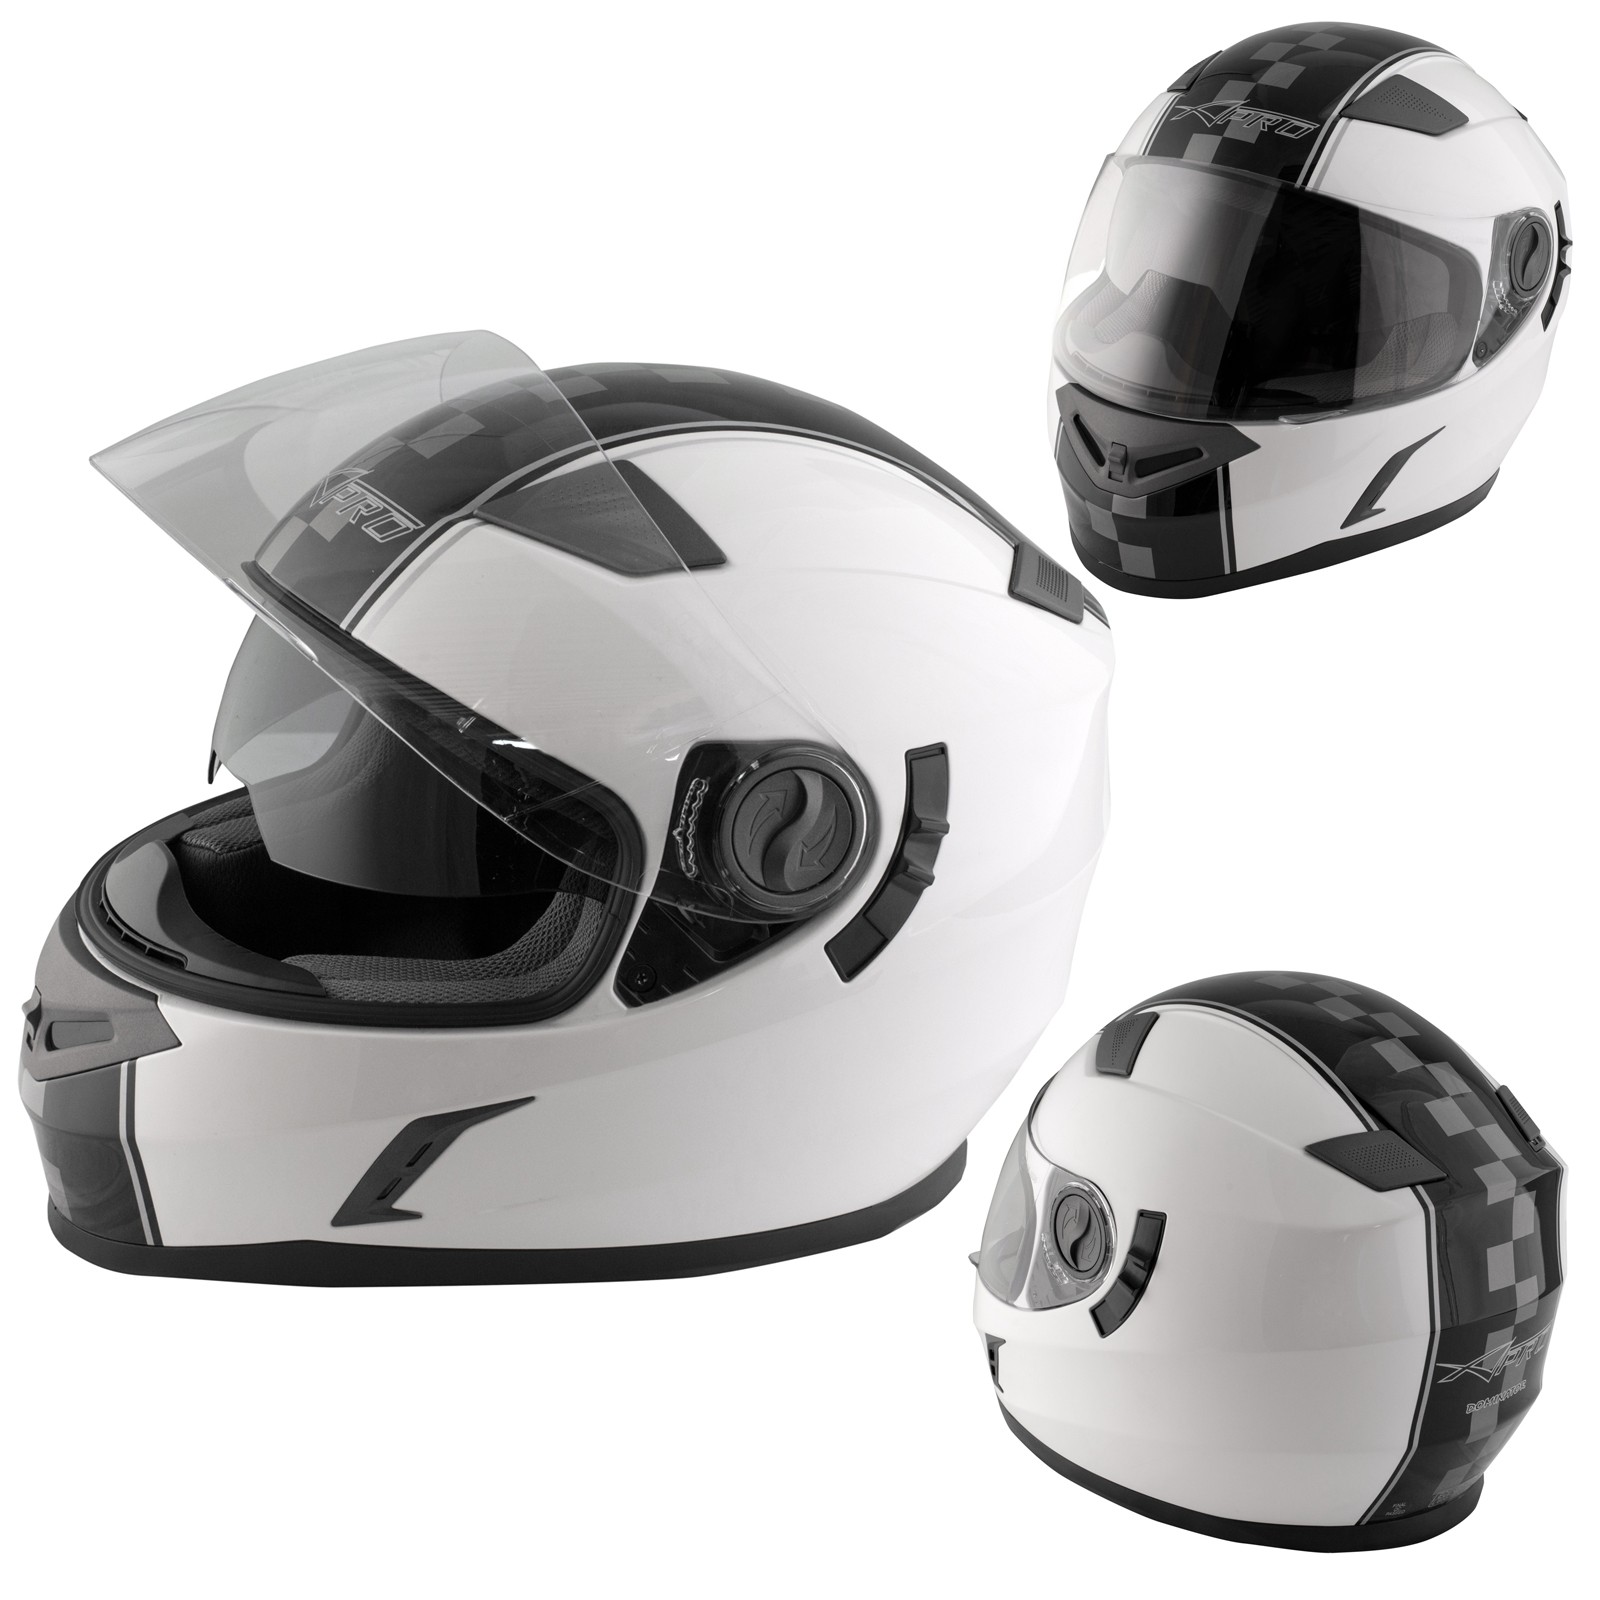 https://www.sonicmotoshop.it/media/catalog/product/cache/4/image/9df78eab33525d08d6e5fb8d27136e95/d/o/dominator-a-pro-casco-helmet-integrale-policarbonato-bianco-white-motorcycle-sonic-moto-config_1.jpg